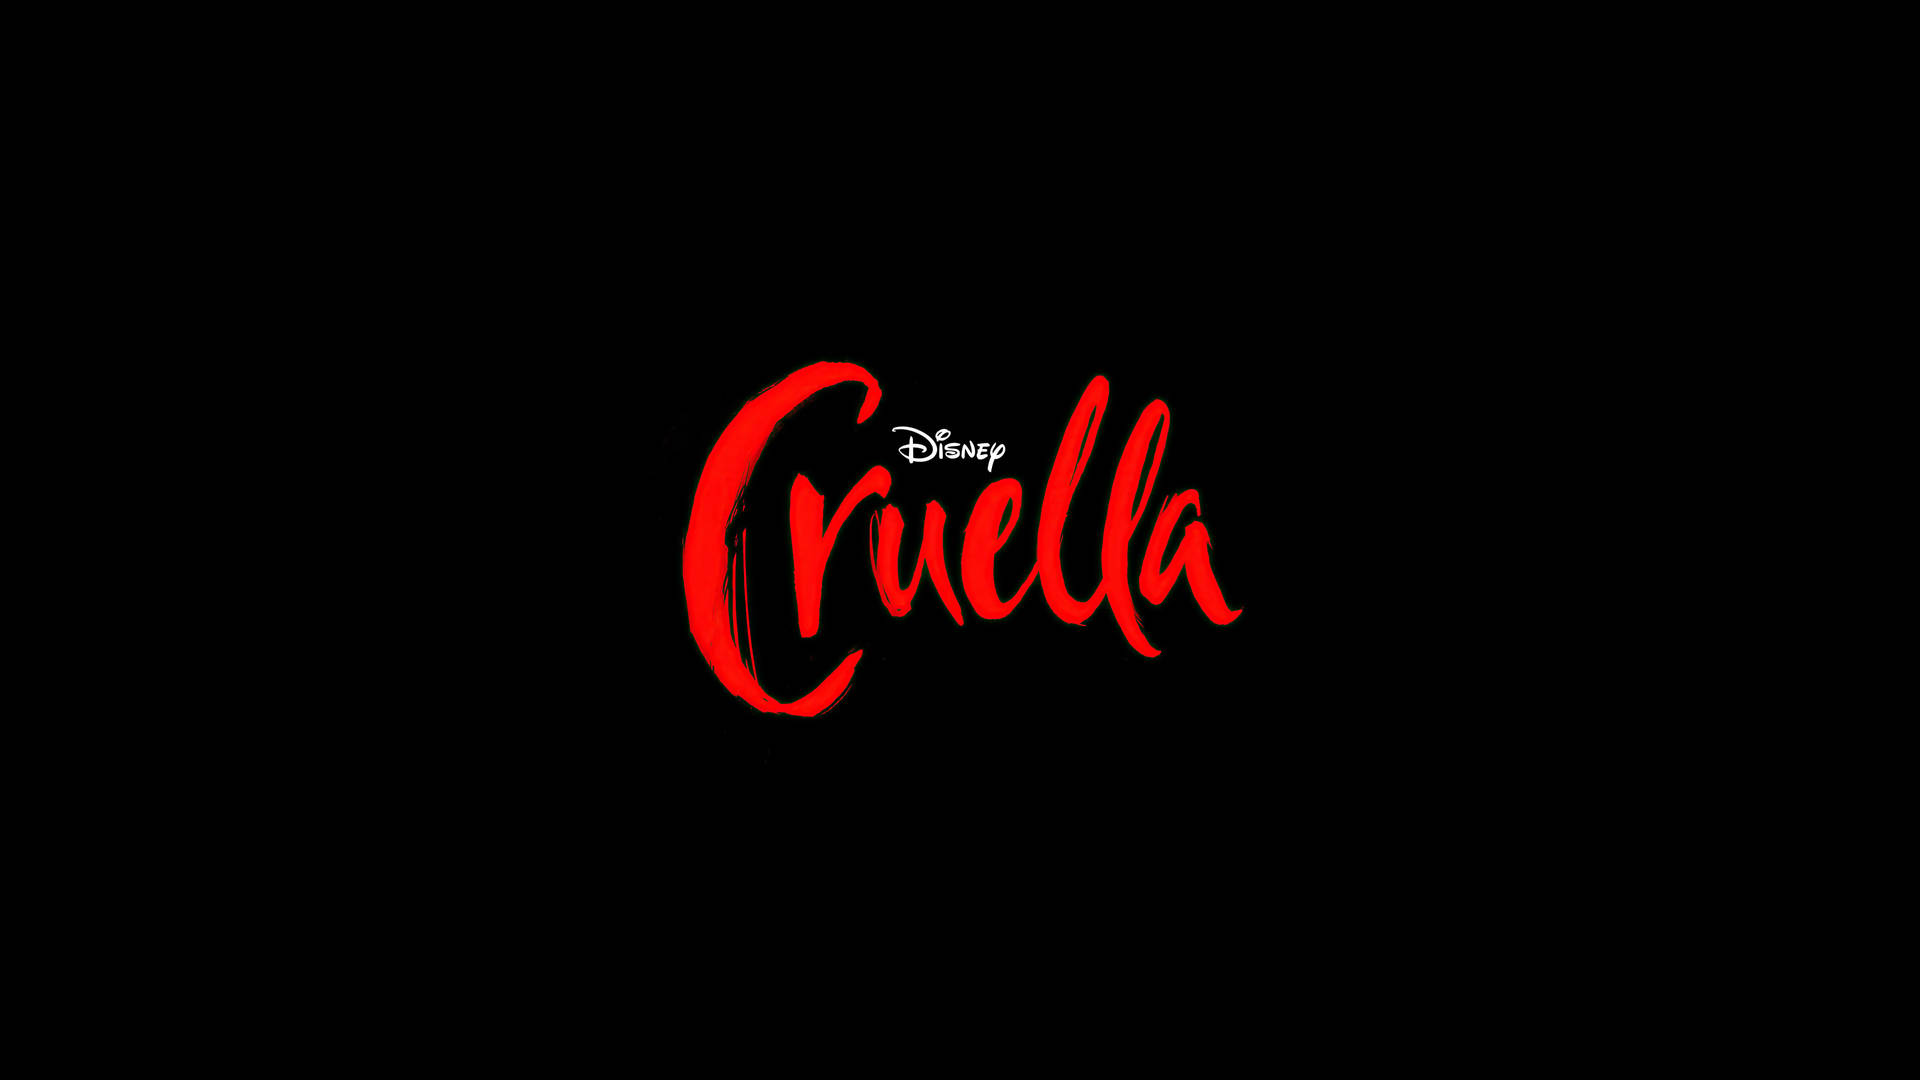 Disney Cruella Logo Background